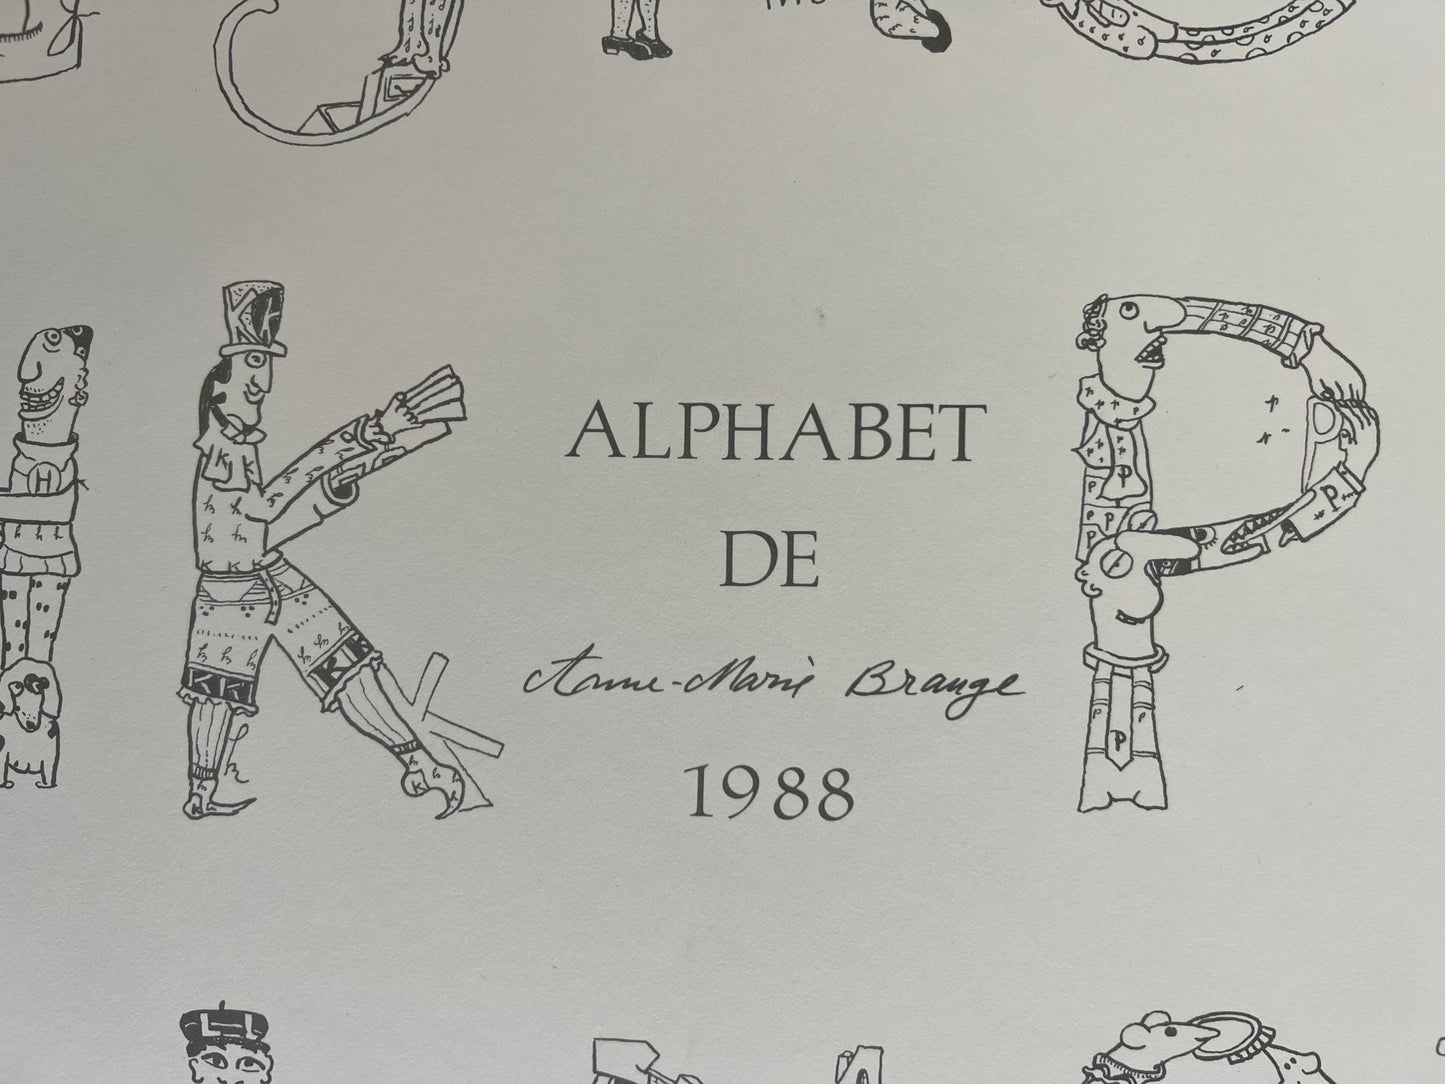 Anne-Marie Brauge. “Alphabet de Anne-Marie Brauge”, 1988